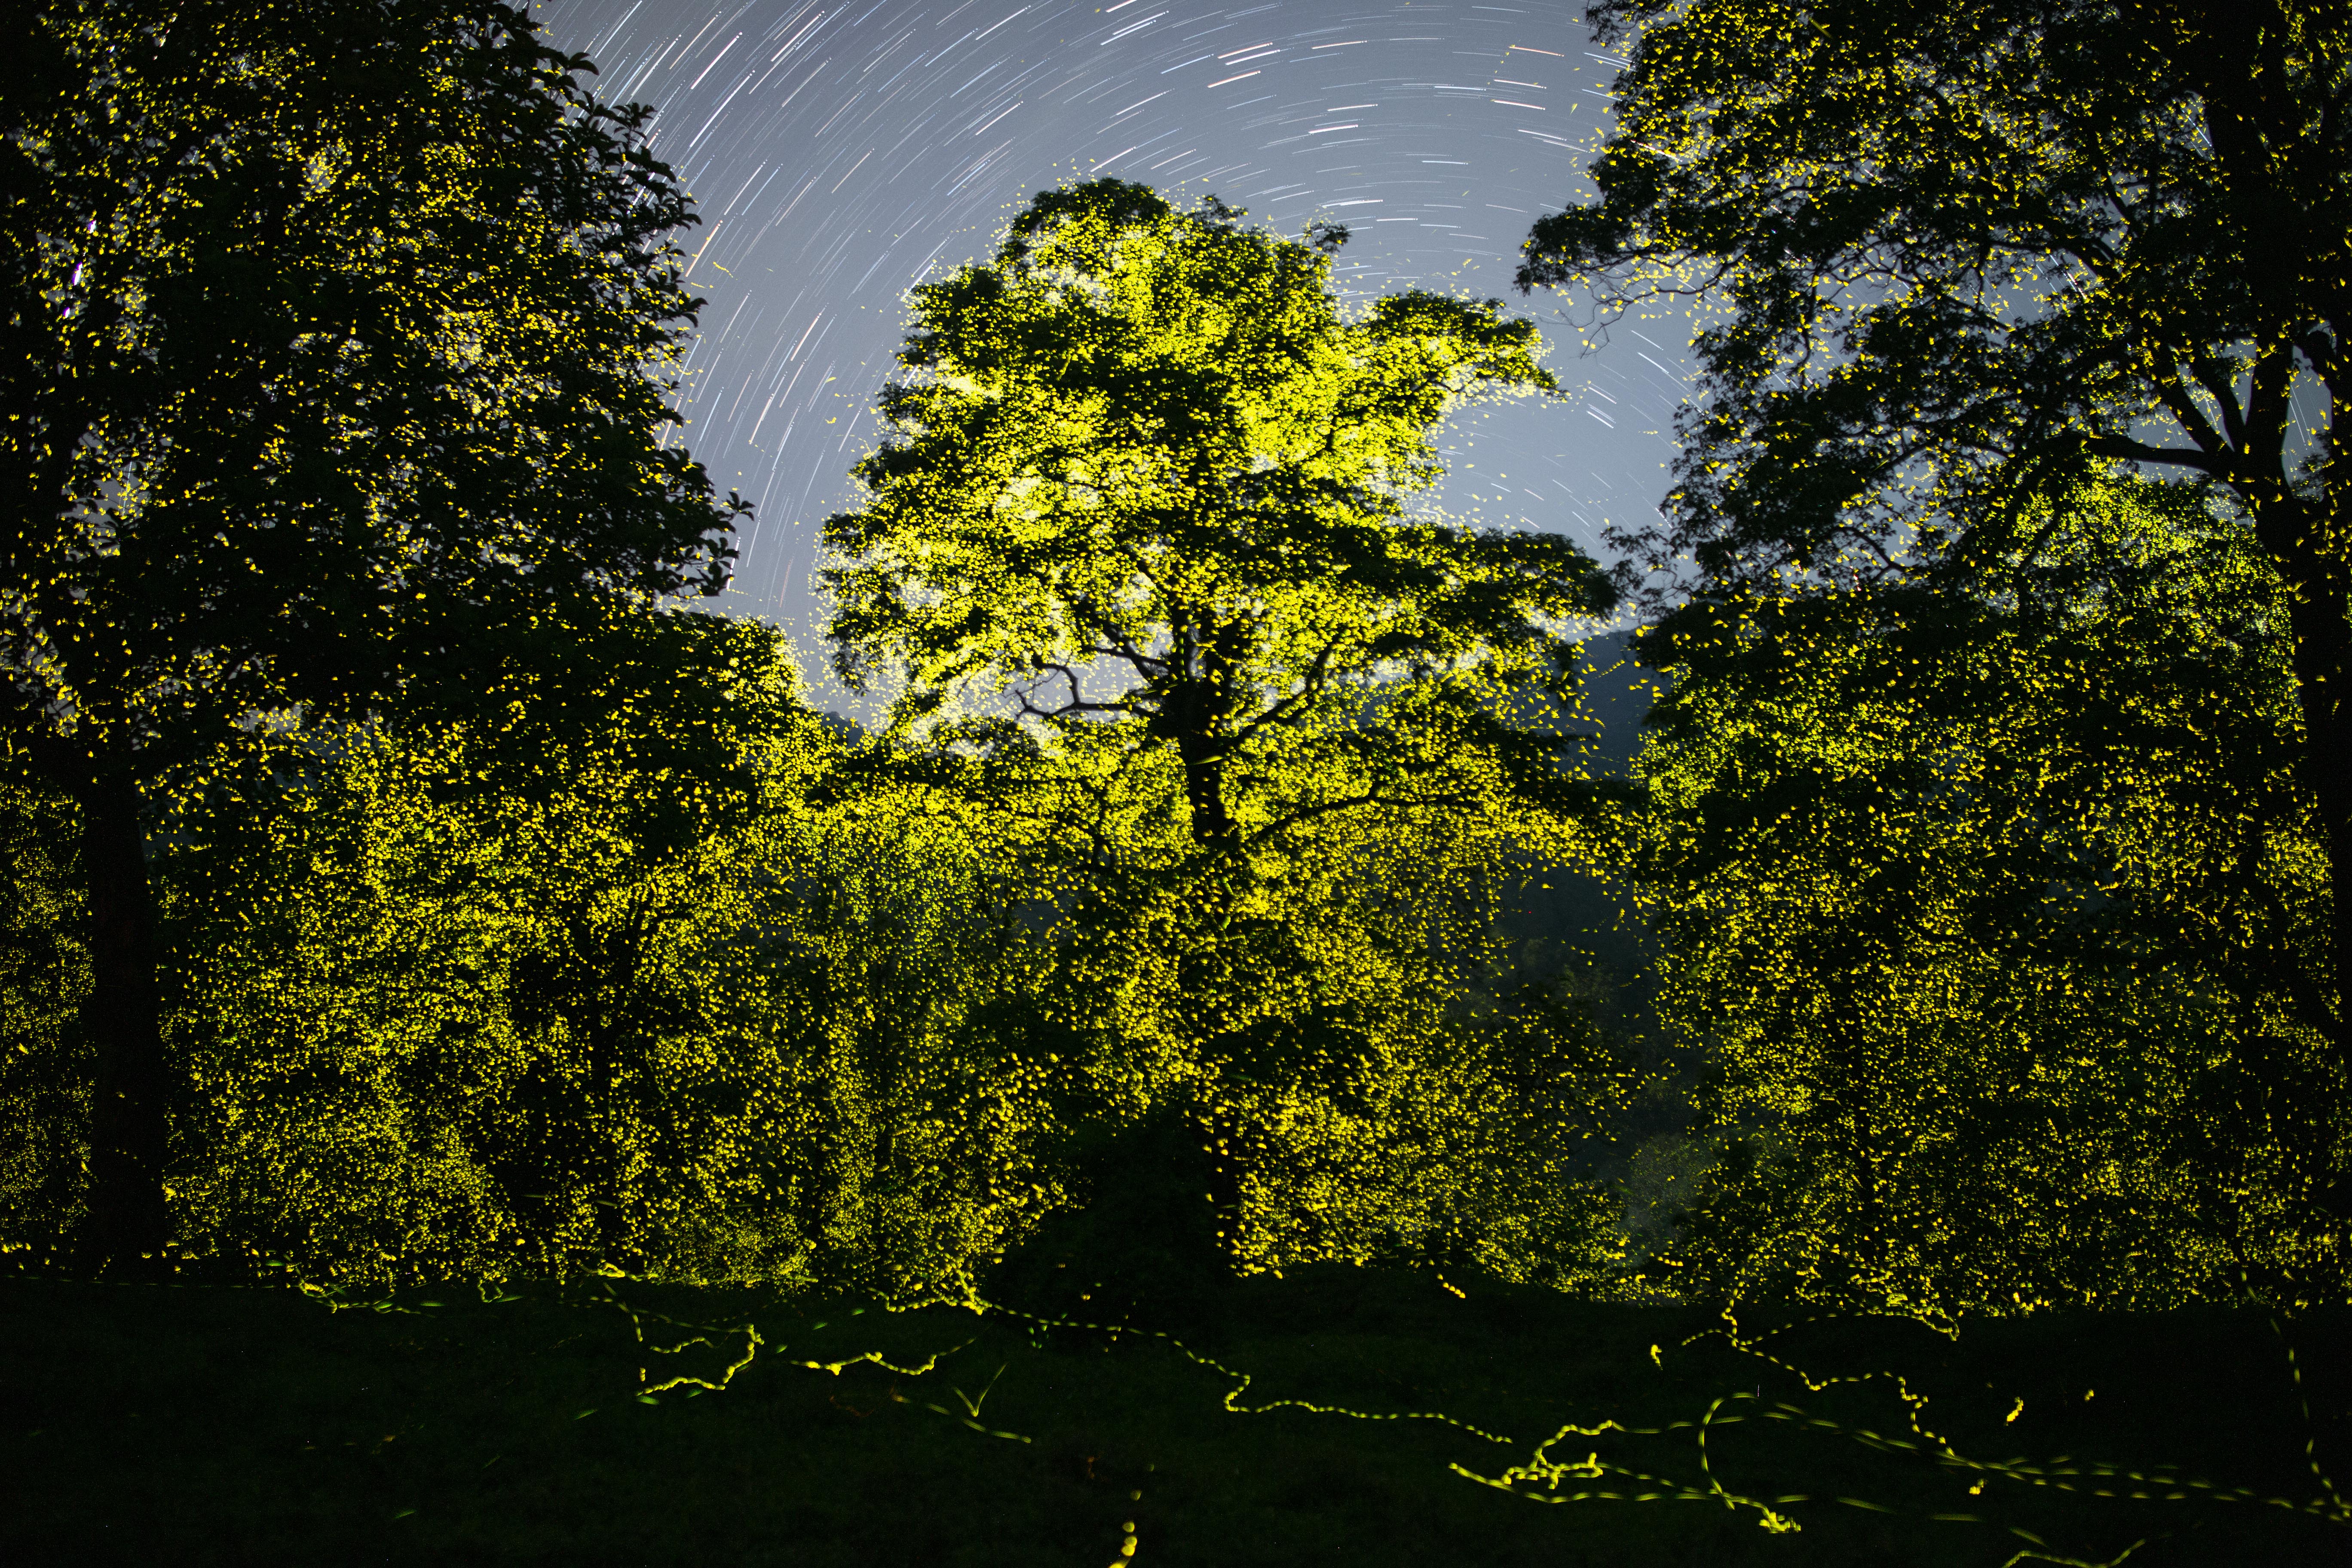 Billions Synchronous Fireflies Light up a Tiger Reserve by Sriram Murali | World Photography Organisation